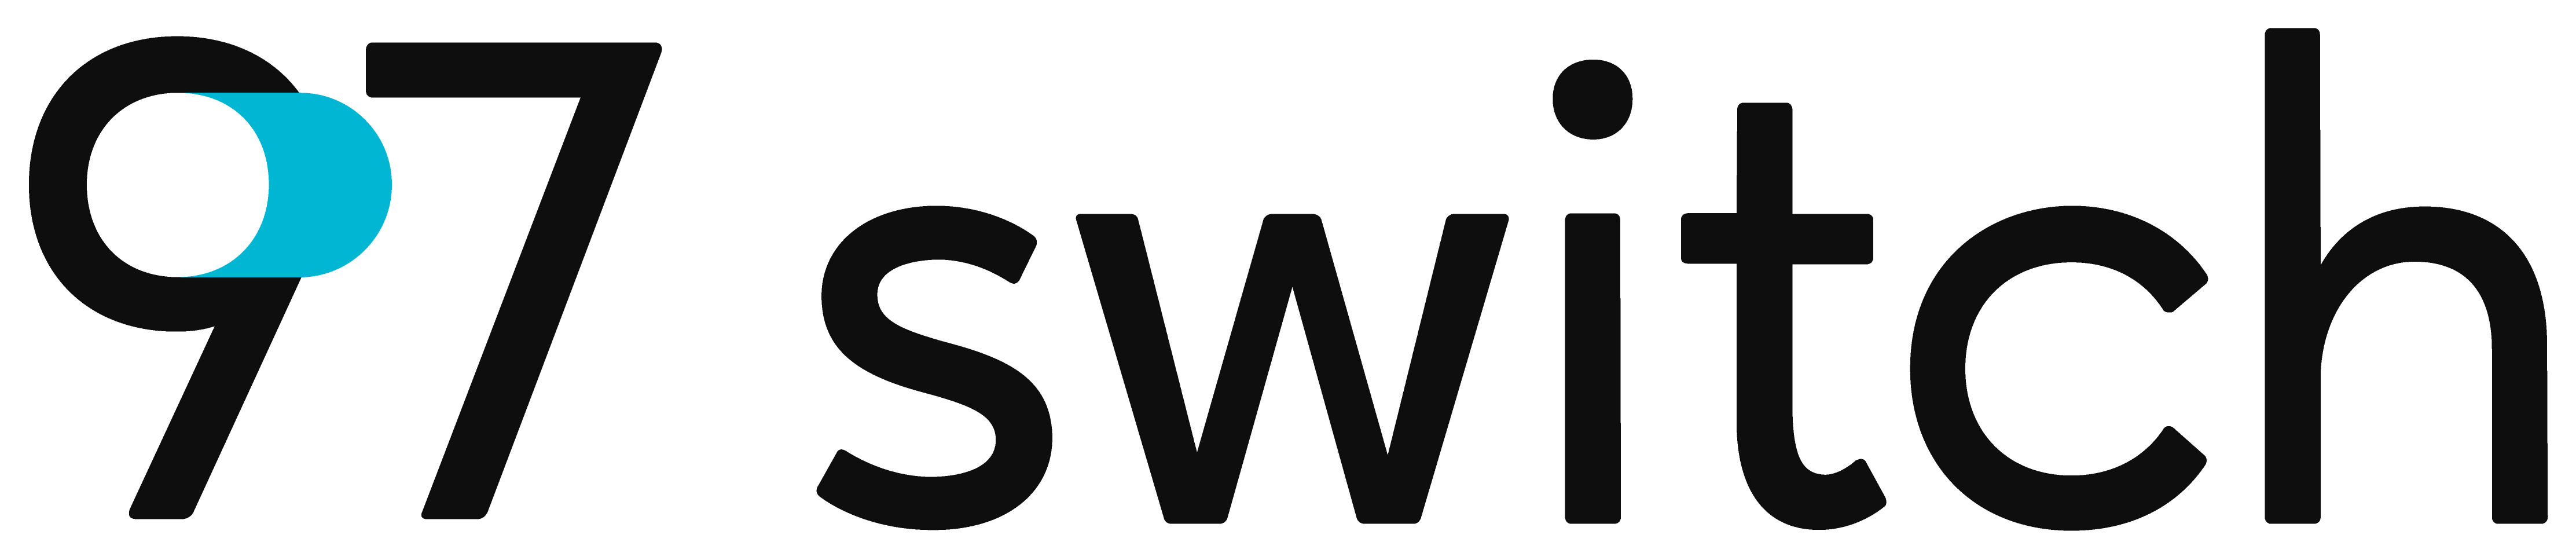 Best BigCommerce Development Agency Logo: 97 Switch